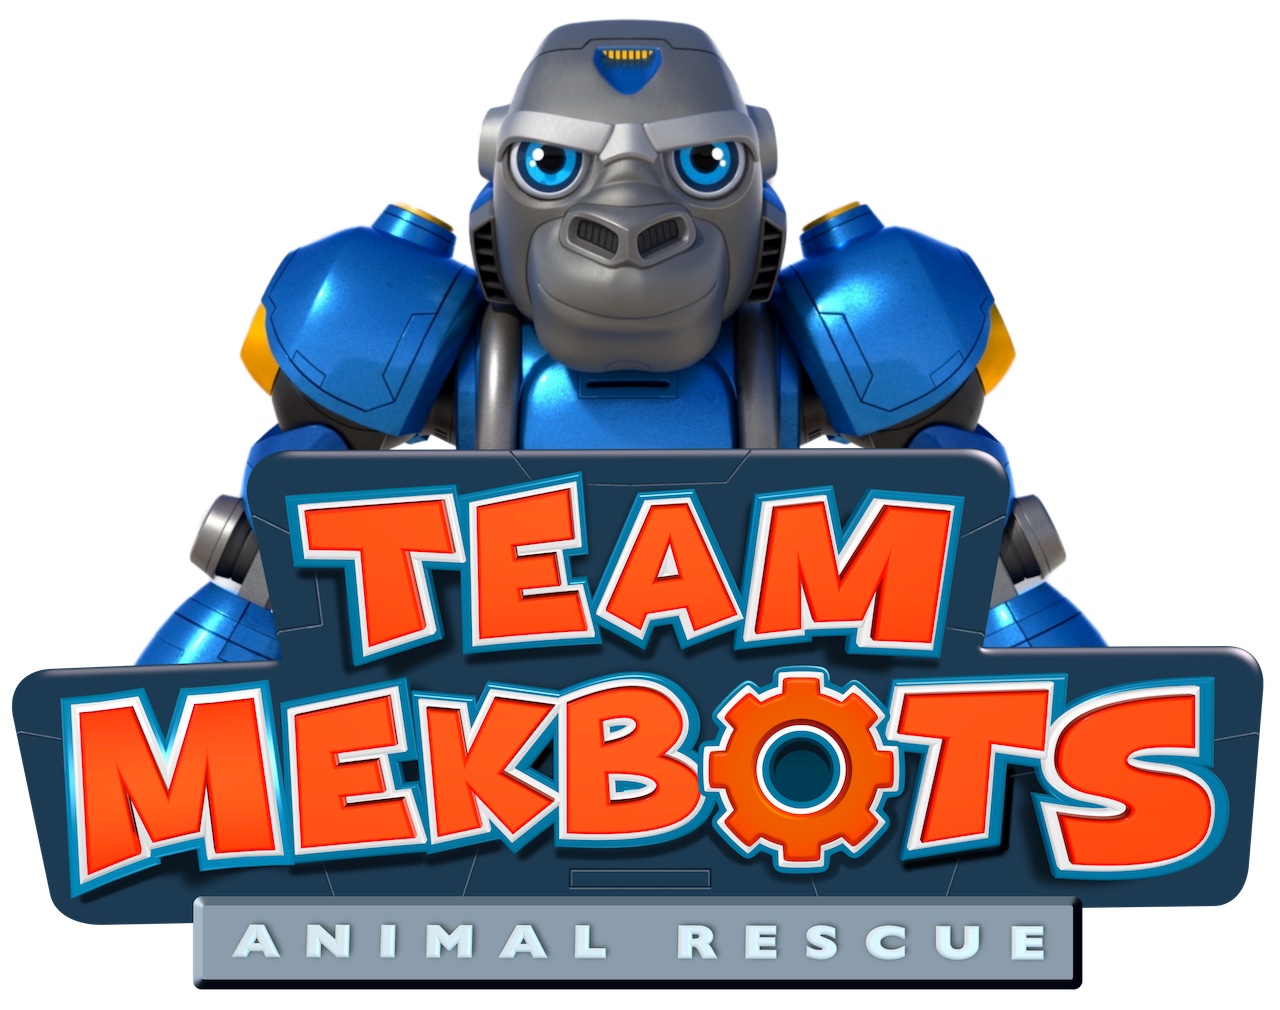 Team Mekbots: Animal Rescue